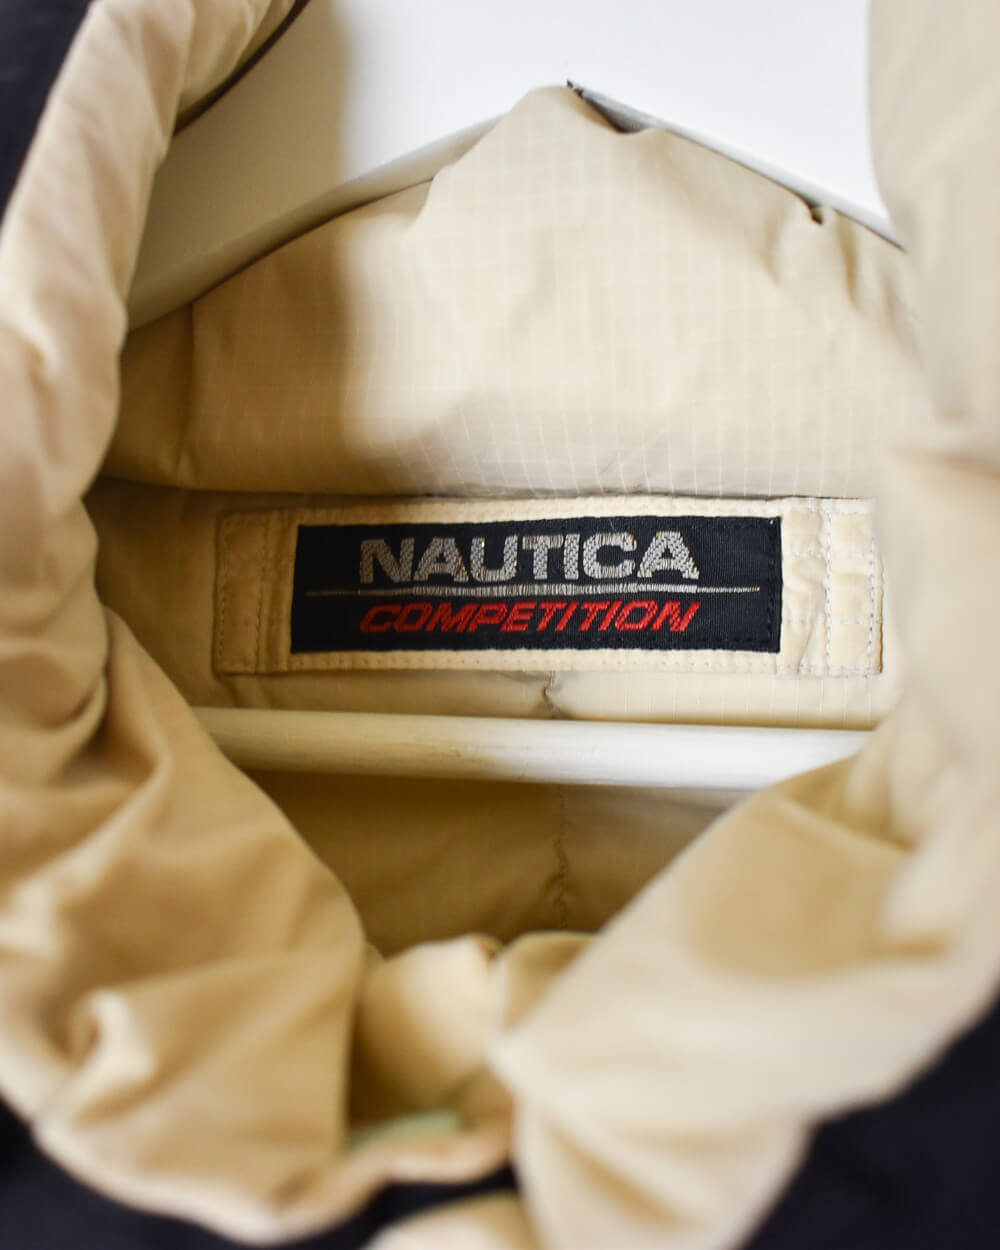 Black Nautica Reversible Puffer Jacket - Large